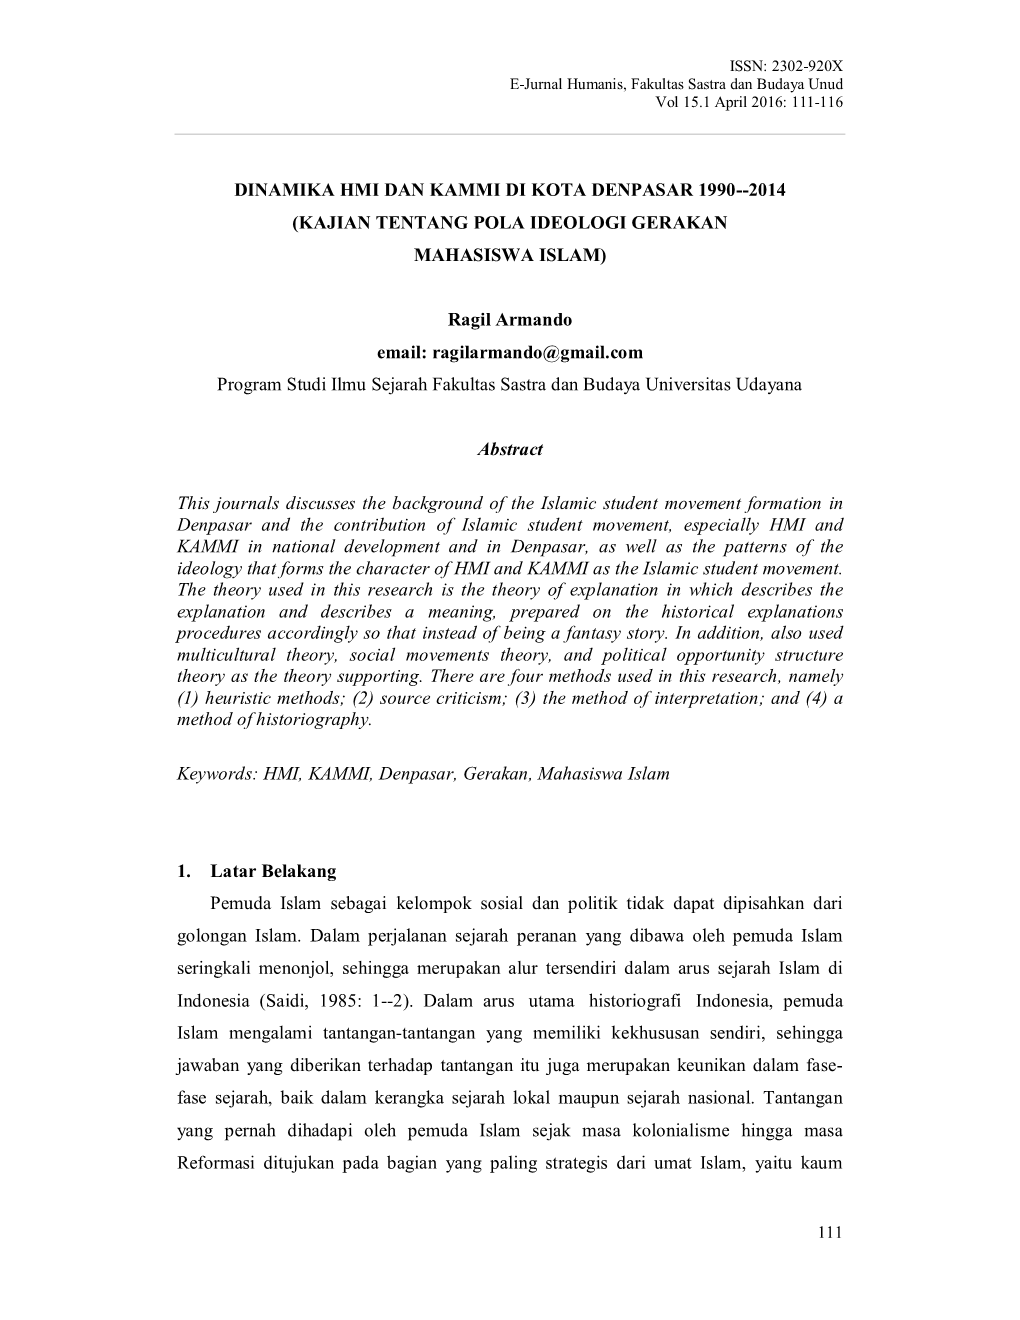 Dinamika Hmi Dan Kammi Di Kota Denpasar 1990--2014 (Kajian Tentang Pola Ideologi Gerakan Mahasiswa Islam)